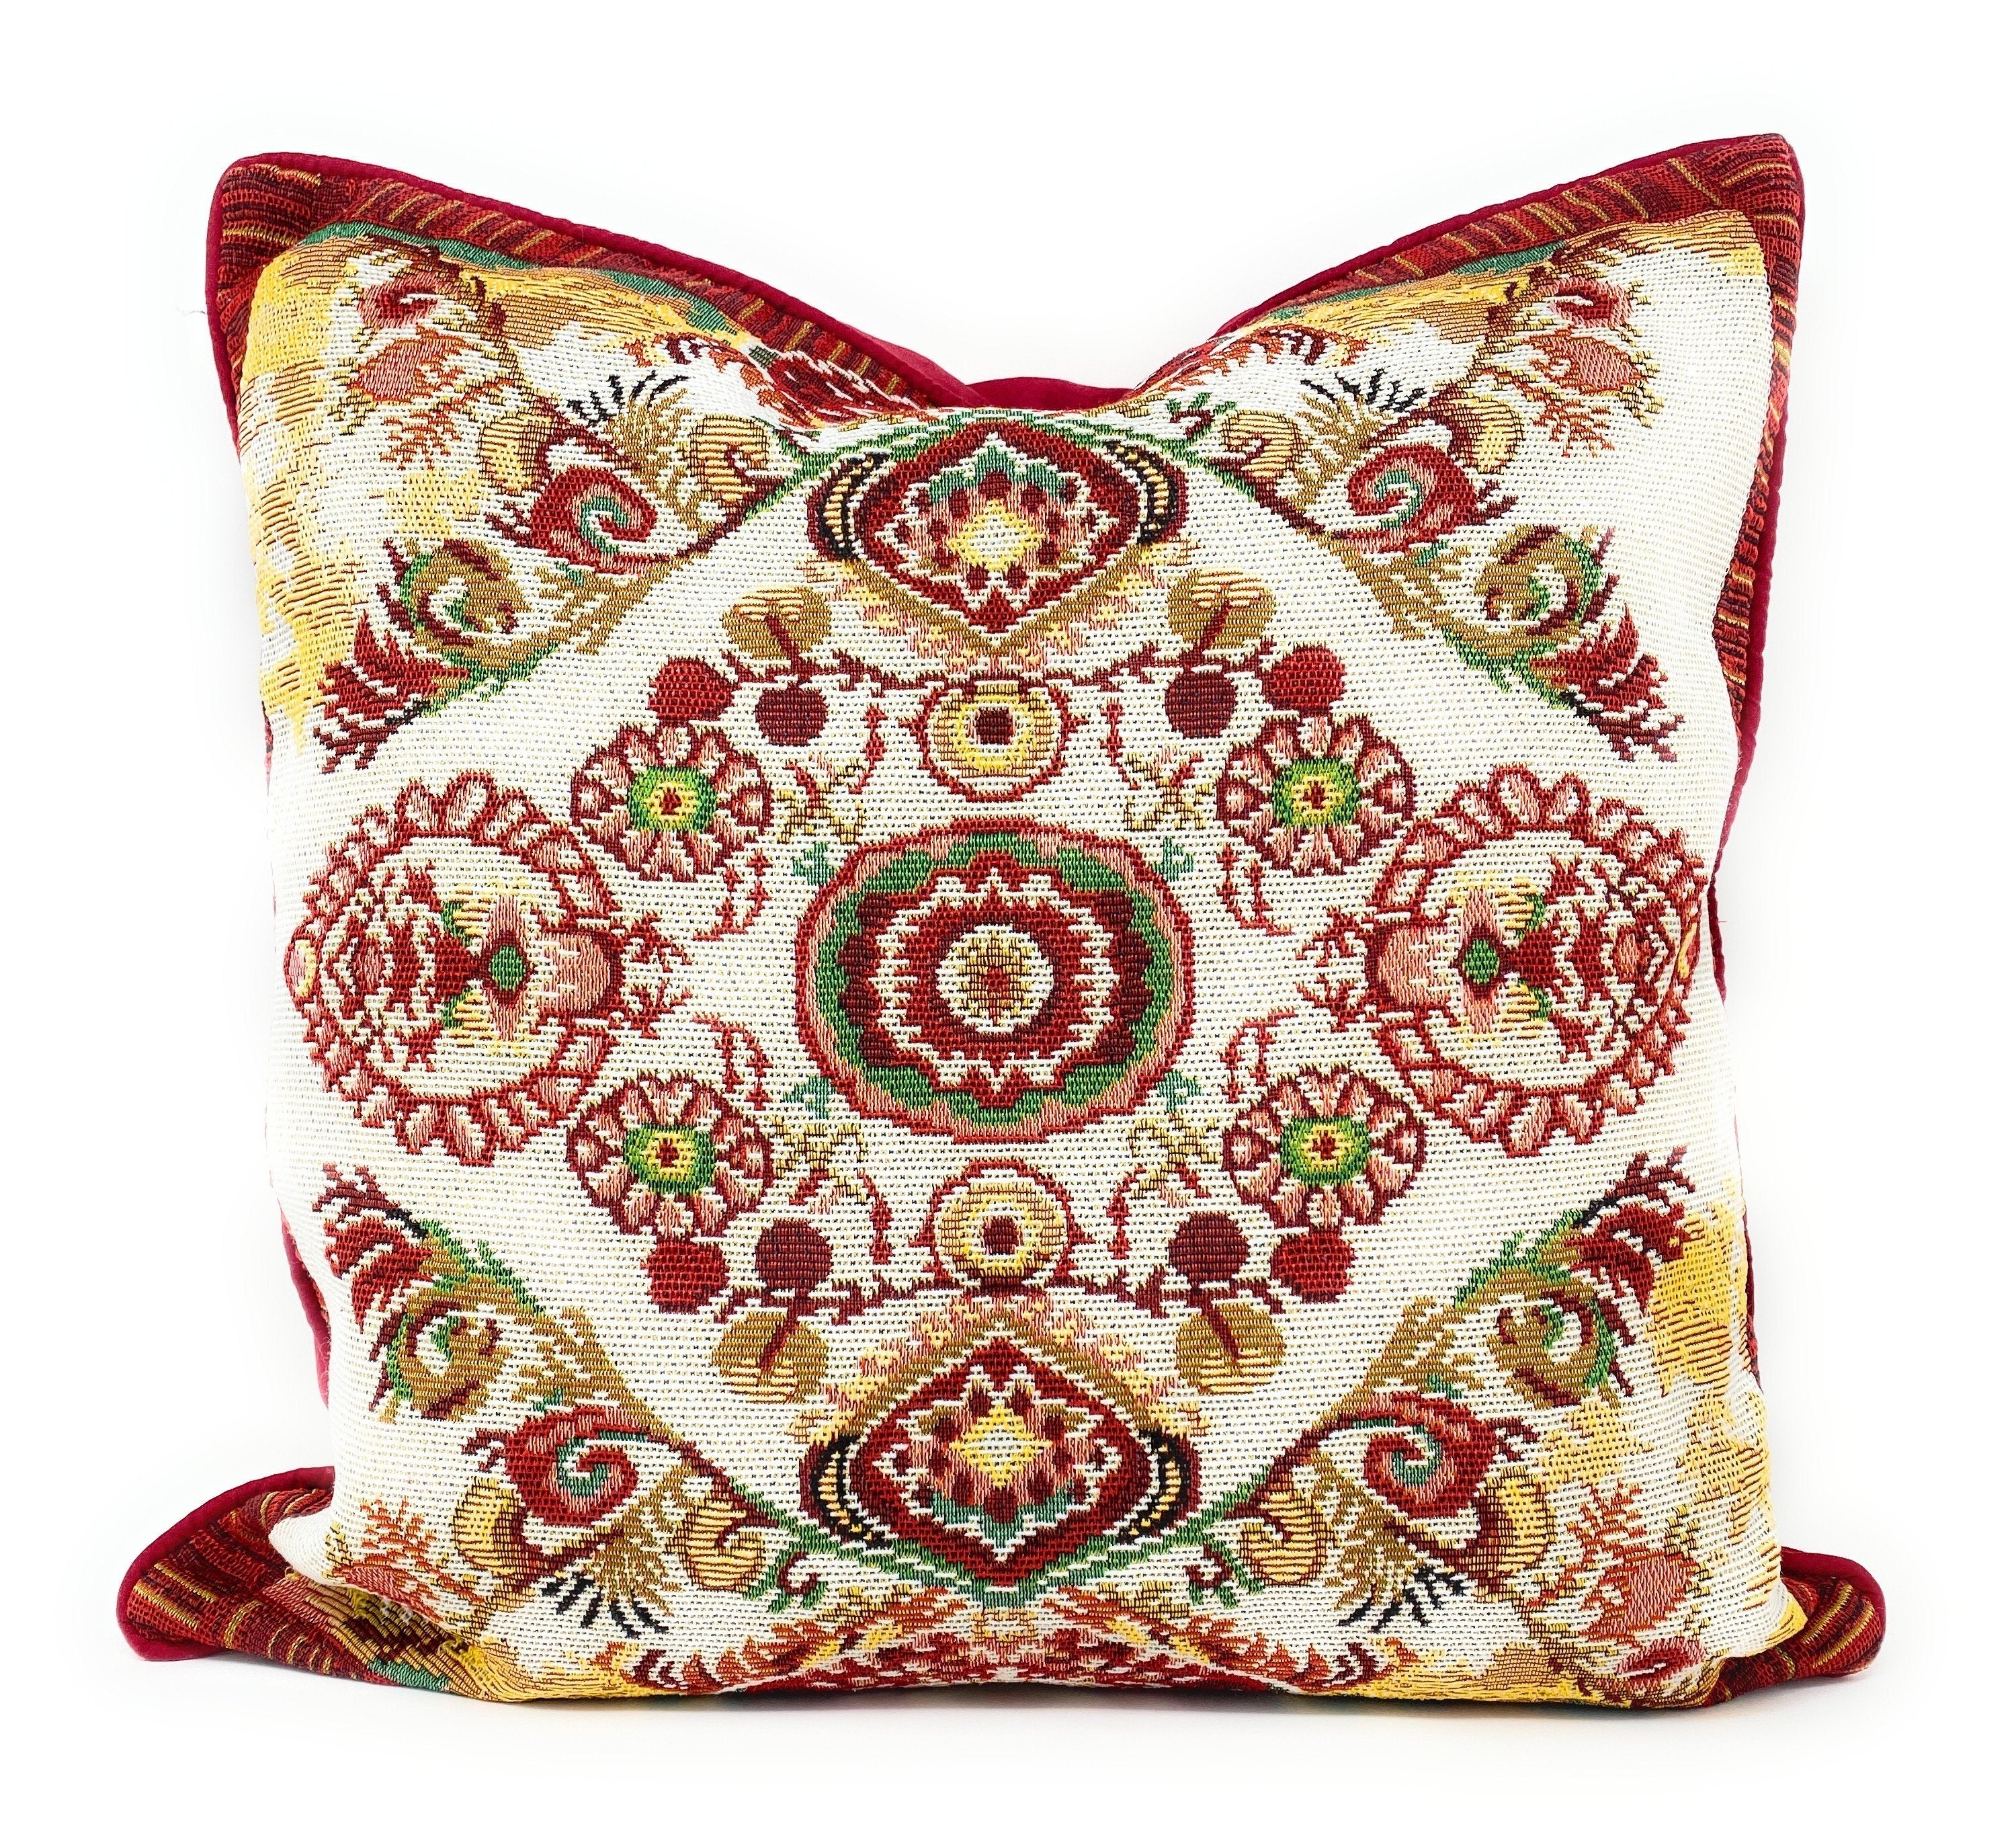 Tache Elegant Burgundy Ornate Paisley Woven Tapestry Throw Pillow Cover (18194) - Tache Home Fashion